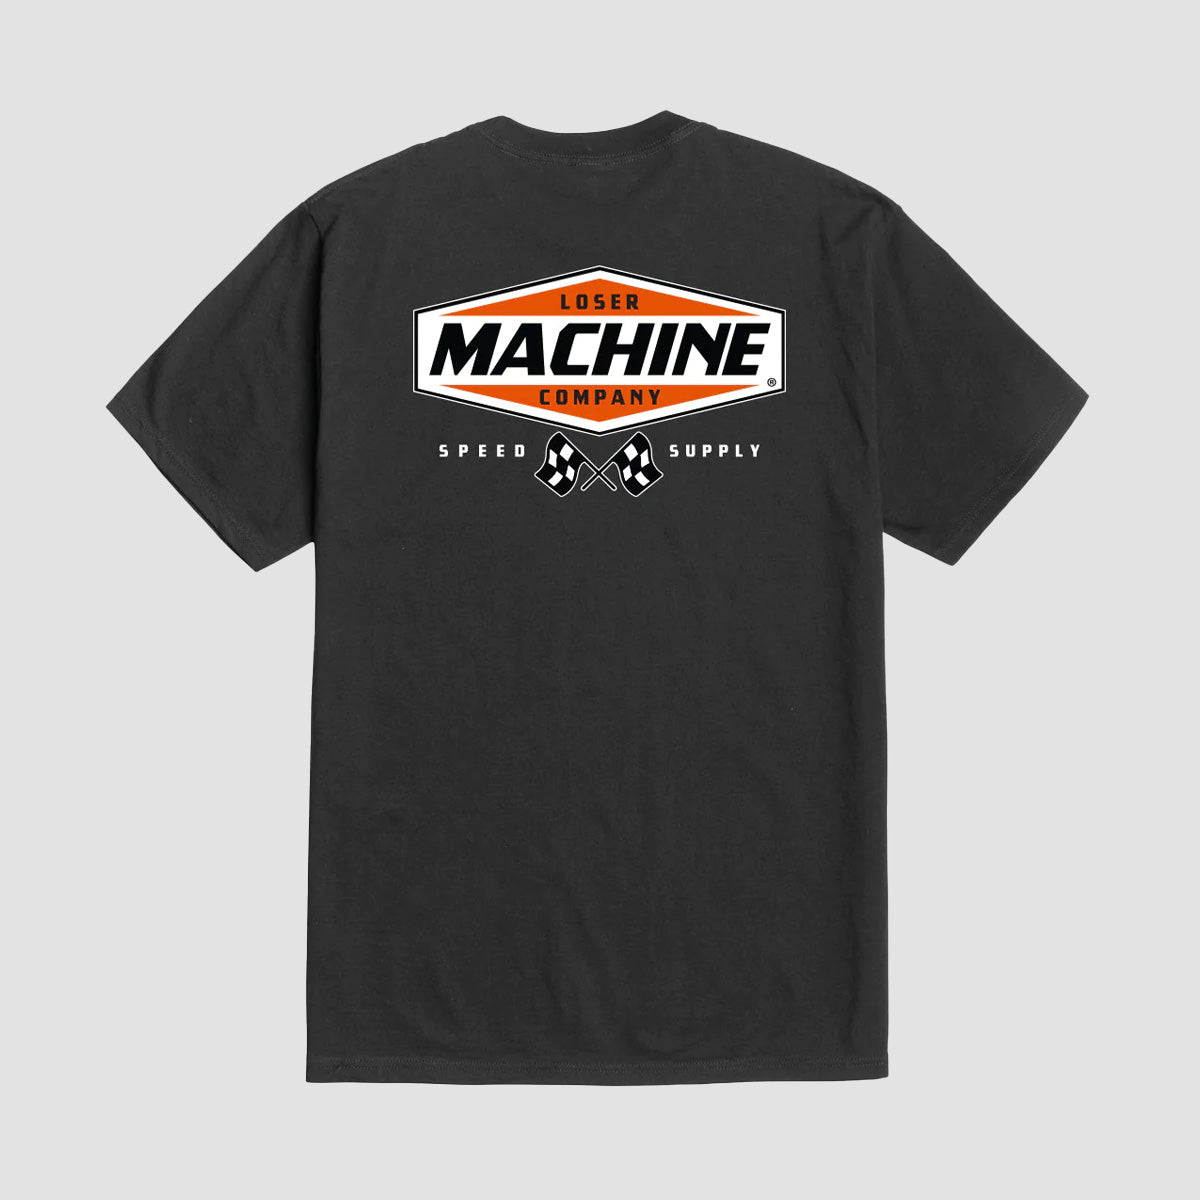 Loser Machine Overdrive T-Shirt Black